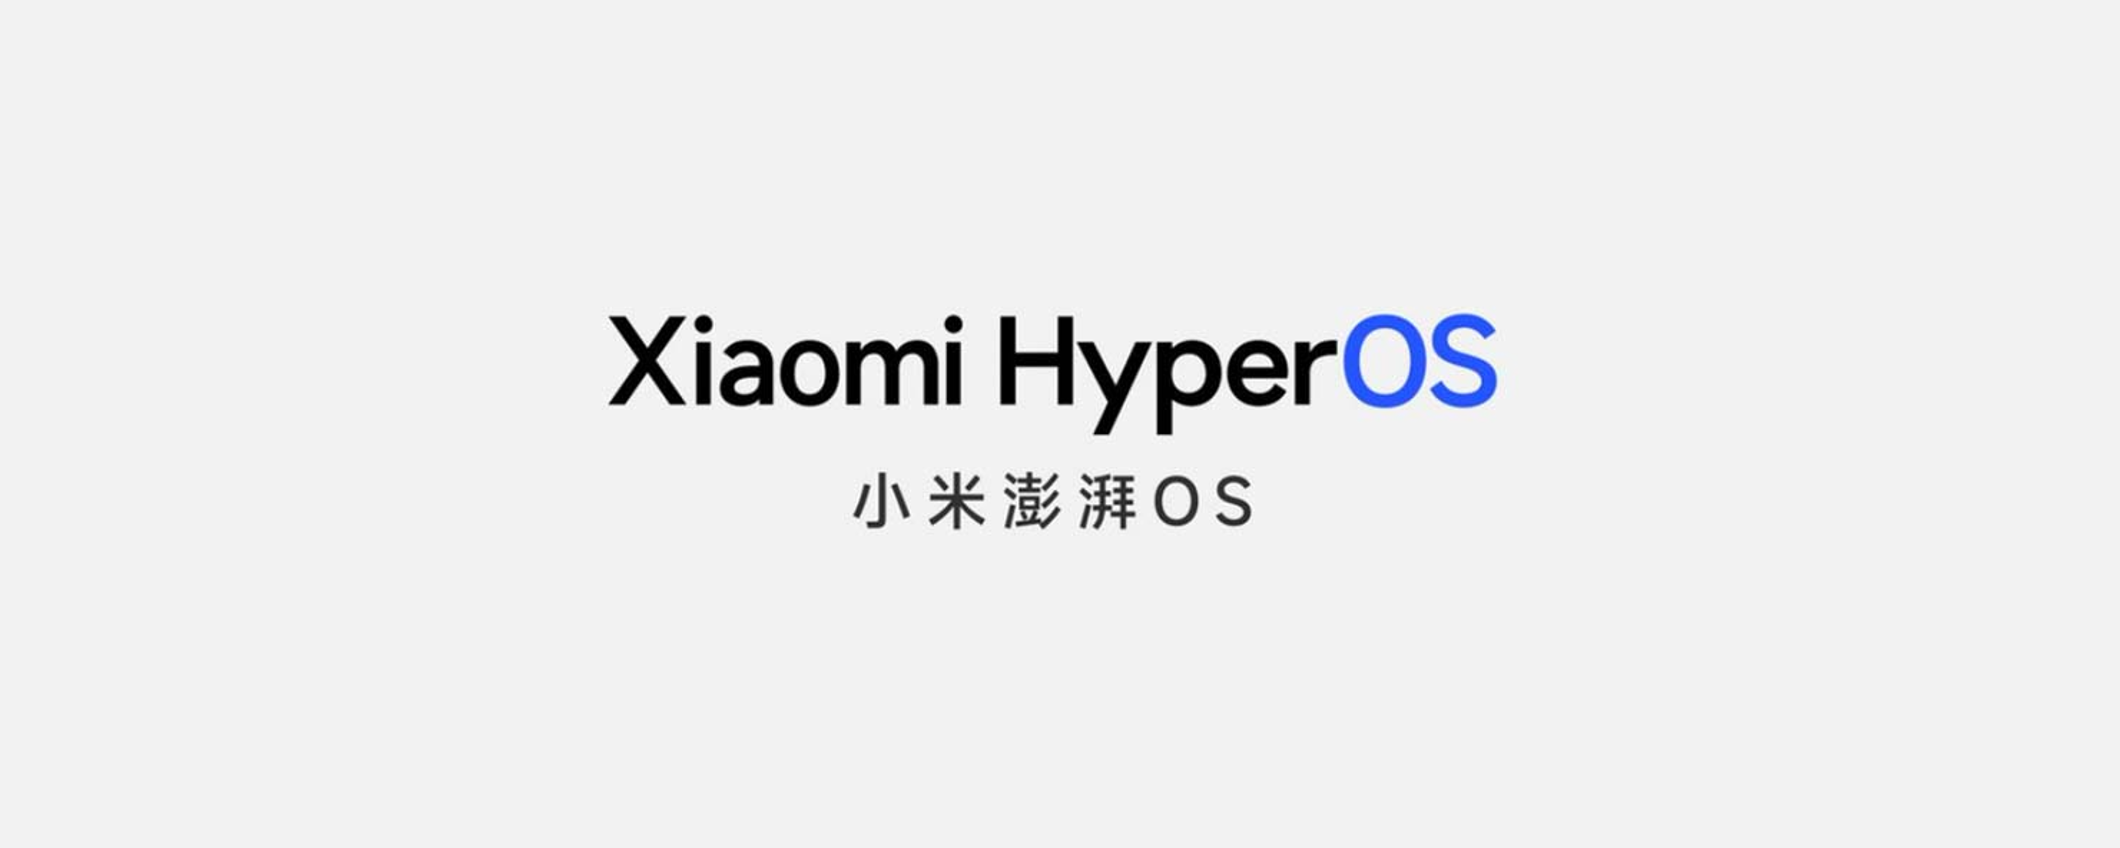 Xiaomi HyperOS rimpiazzerà la tanto amata MIUI: è una SVOLTA